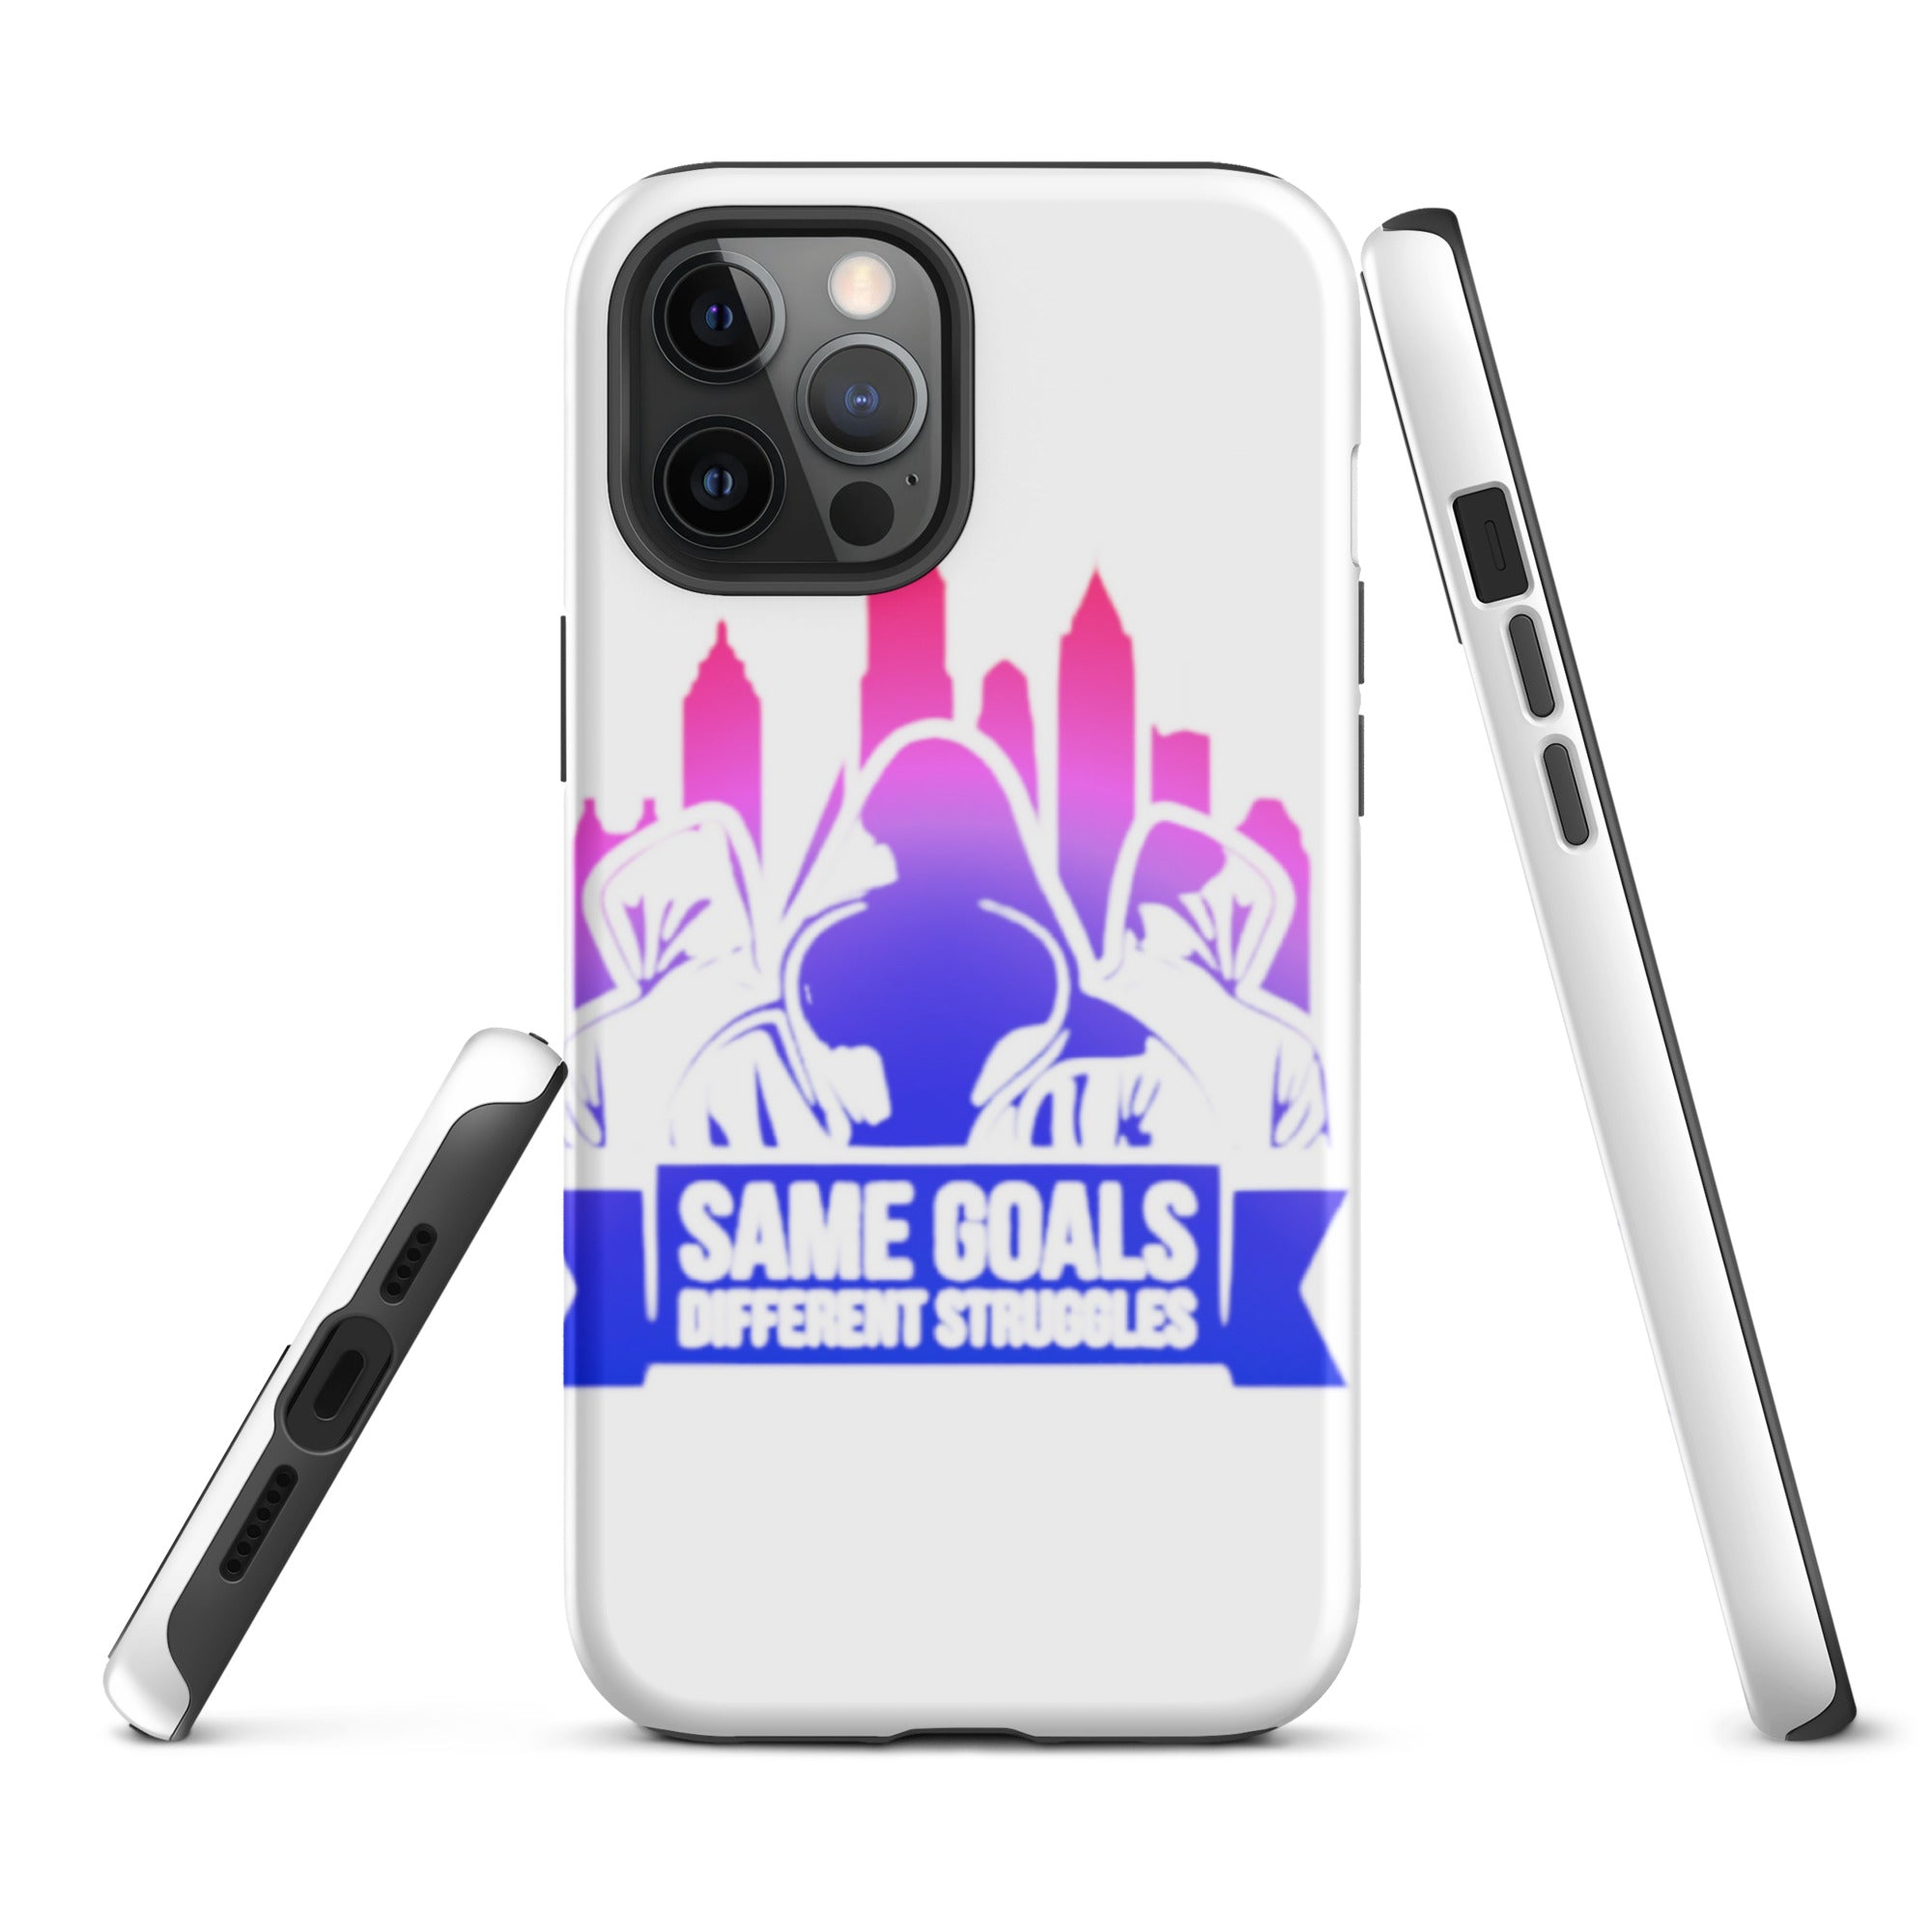 Same Goals Different Struggles Tough iPhone case